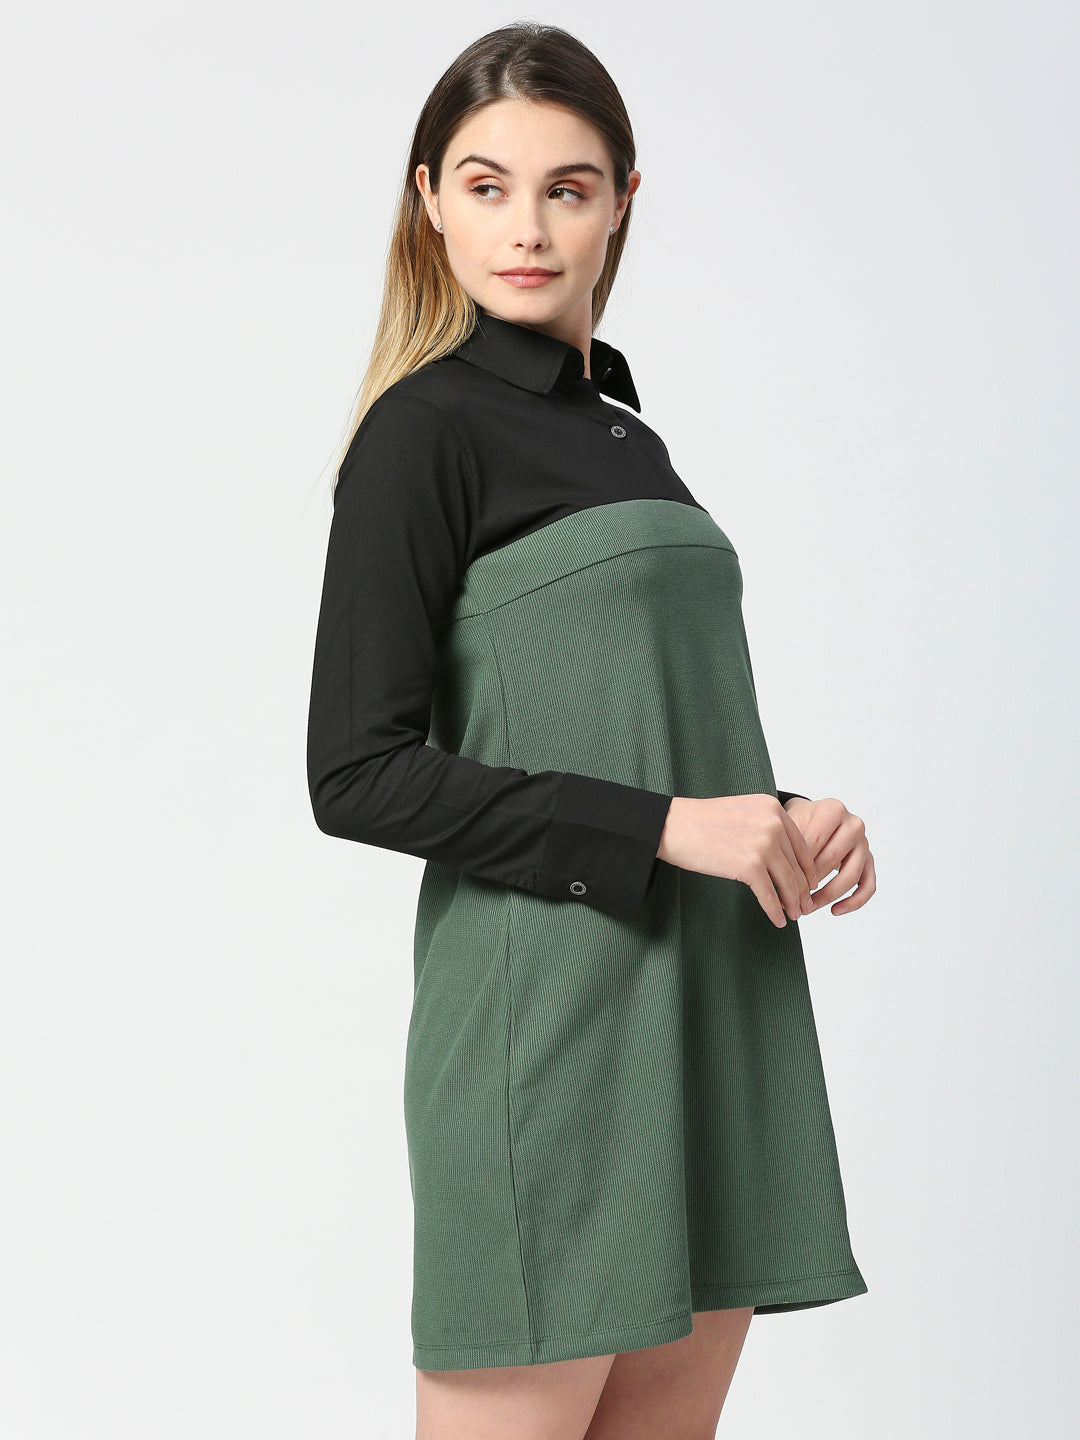 Buy Blamblack Women's Green & Black Colour Knee Length Dress